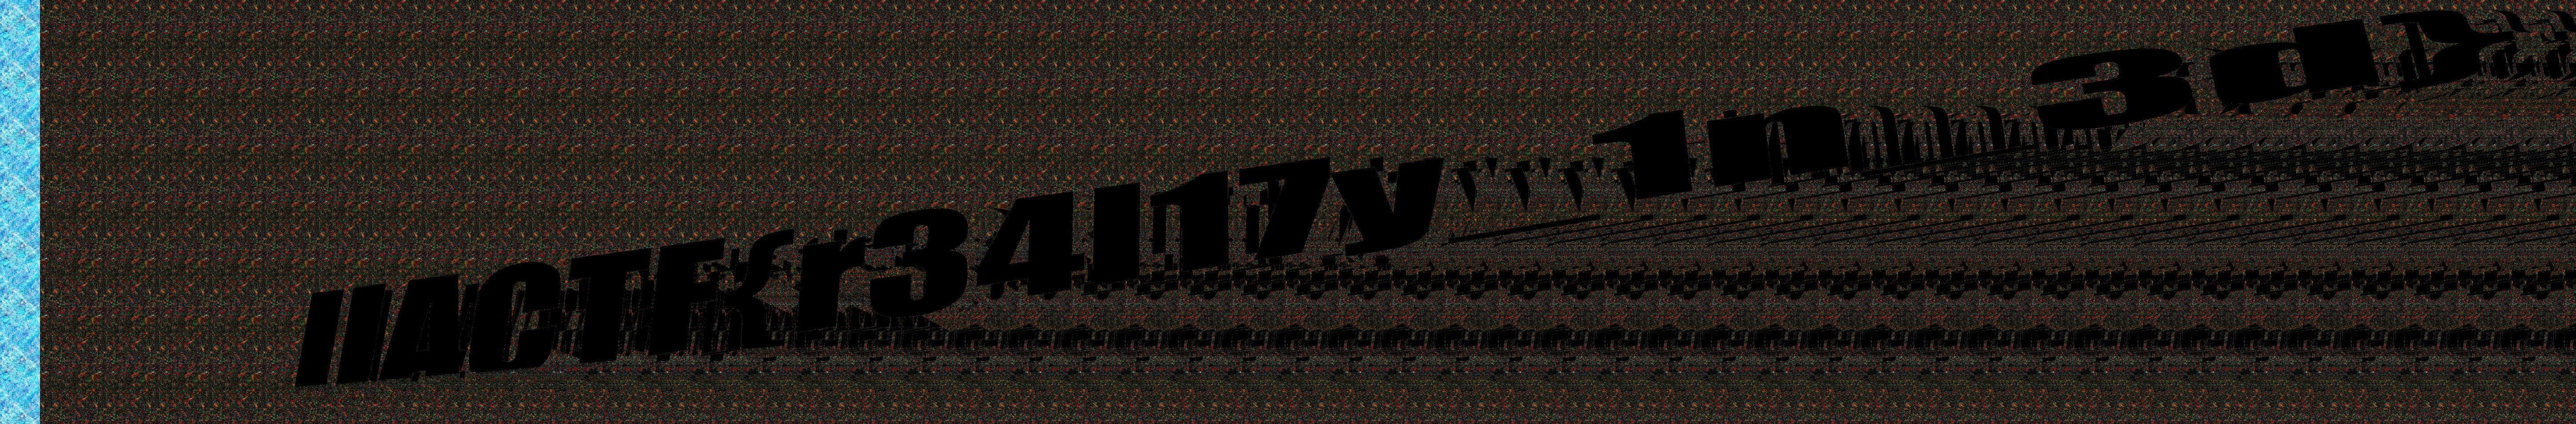 Gimp Decoded Image